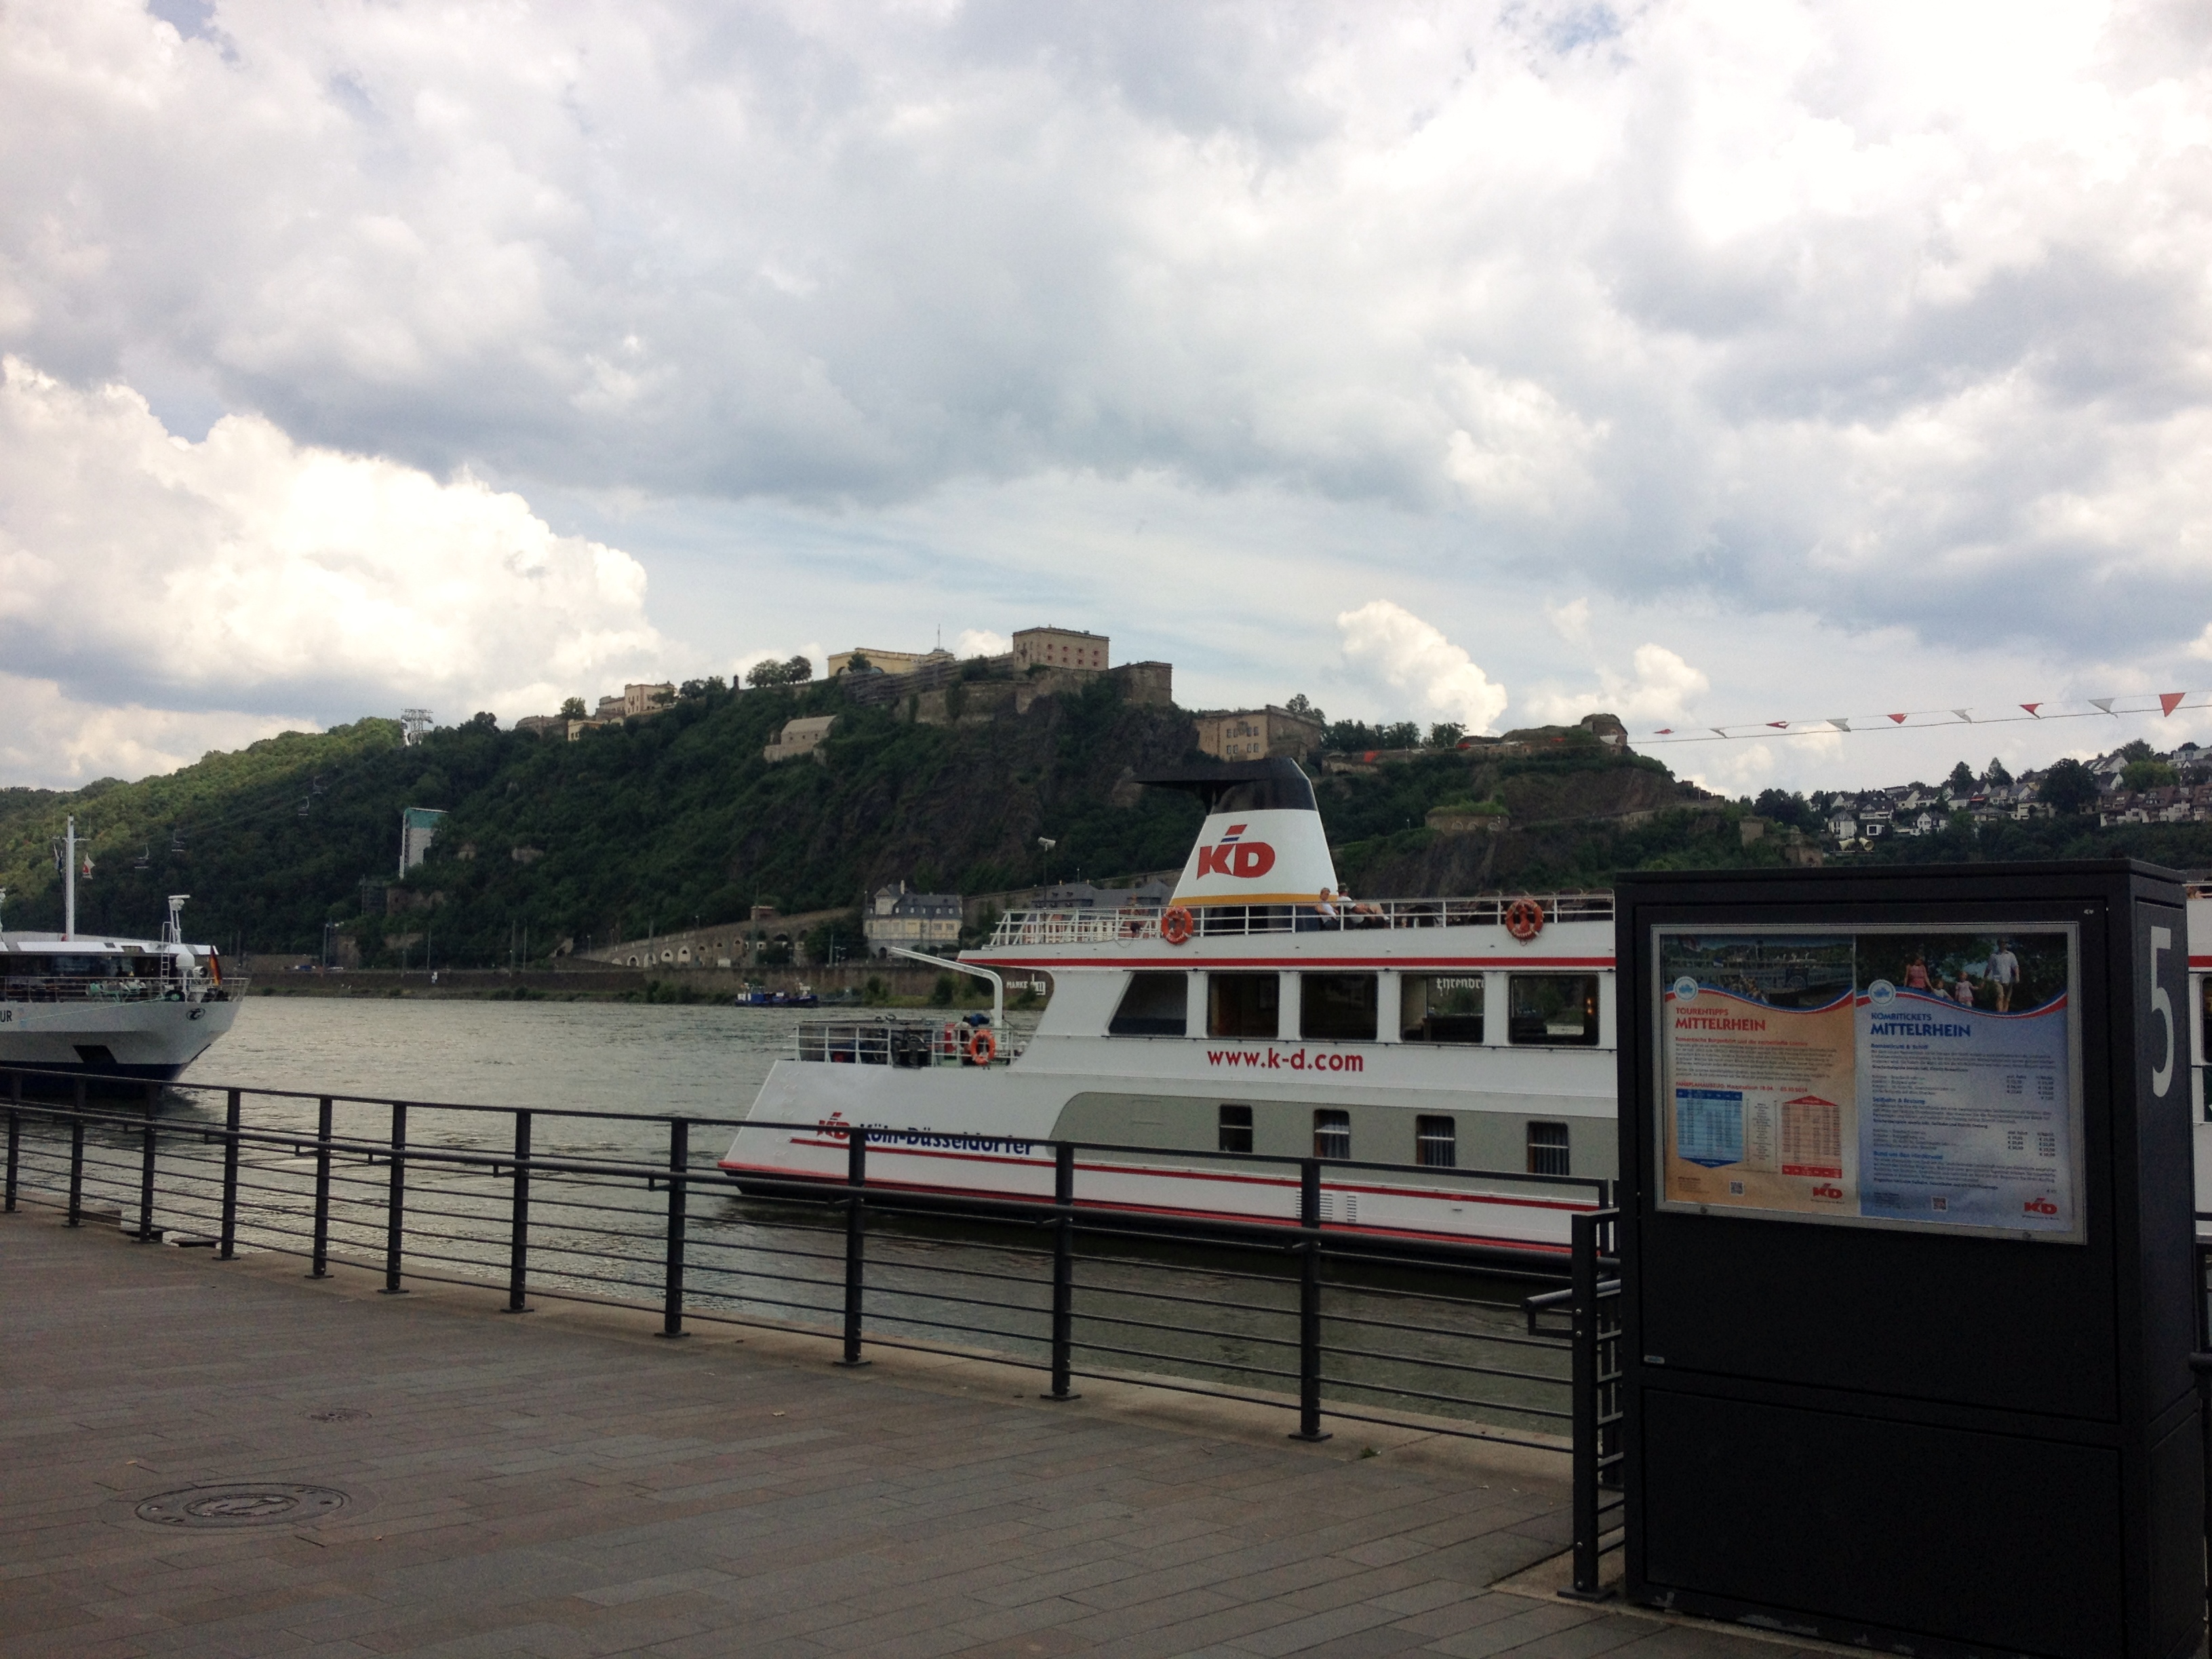 1 leaving Koblenz